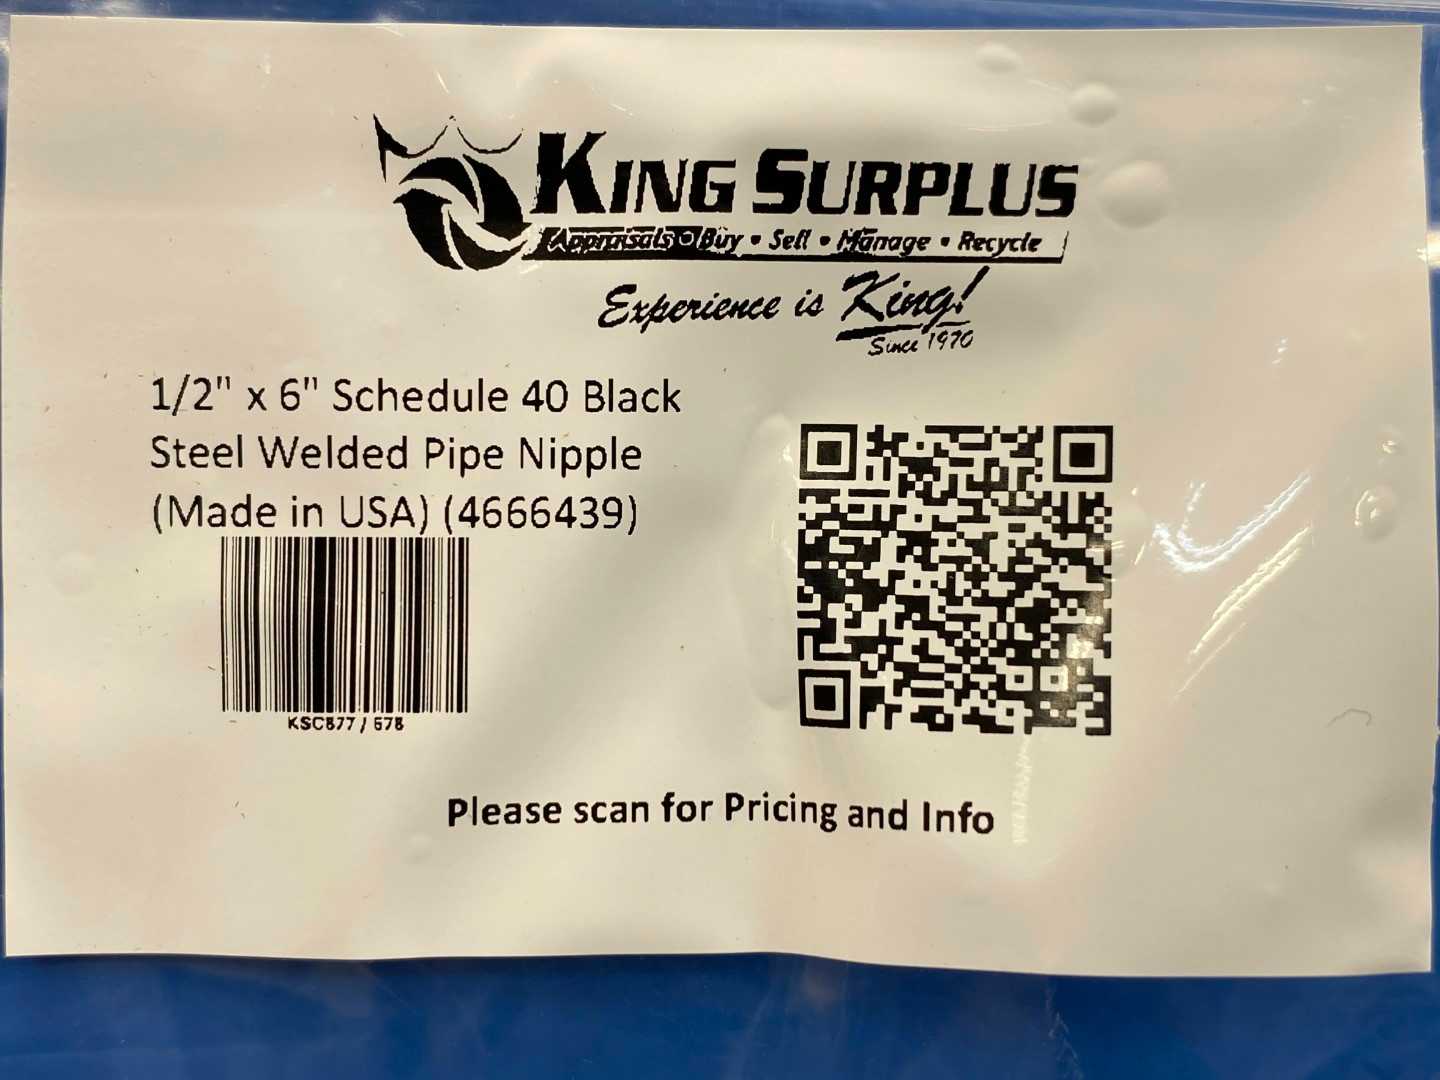 1/2" x 6" Schedule 40 Black Steel Welded Pipe Nipple (Made in USA) (4666439)